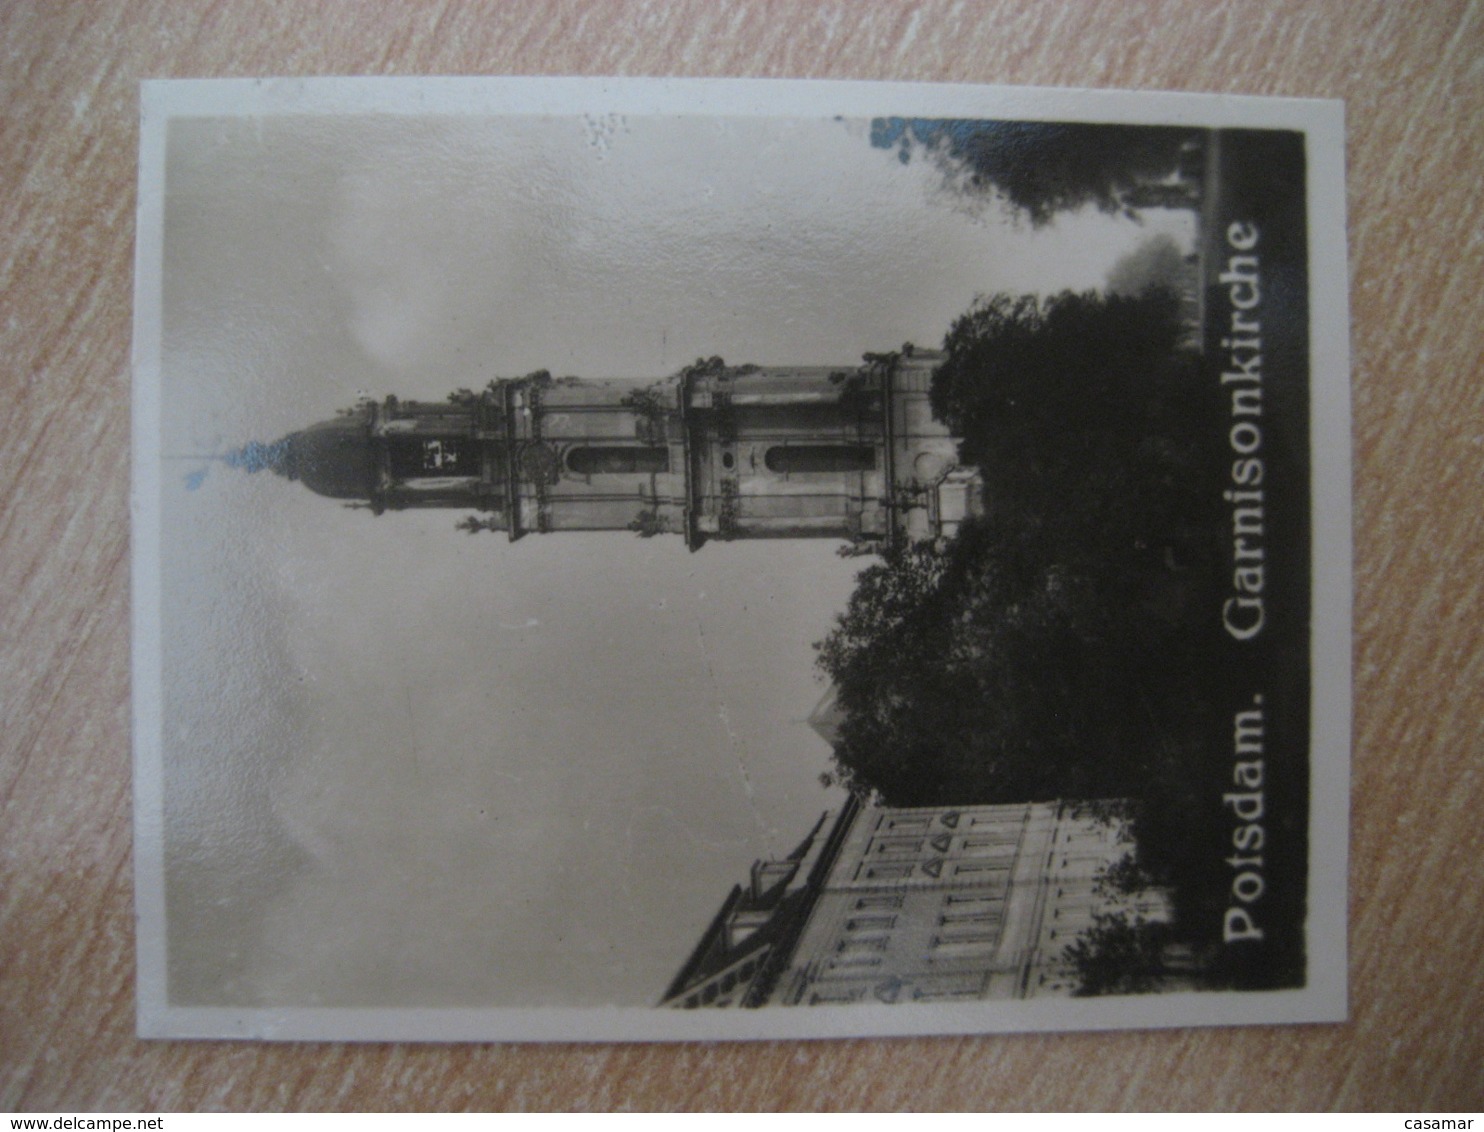 POTSDAM Garnisonkirche Church Bilder Card Photo Photography (4x5,2cm) Brandenburg GERMANY 30s Tobacco - Non Classificati